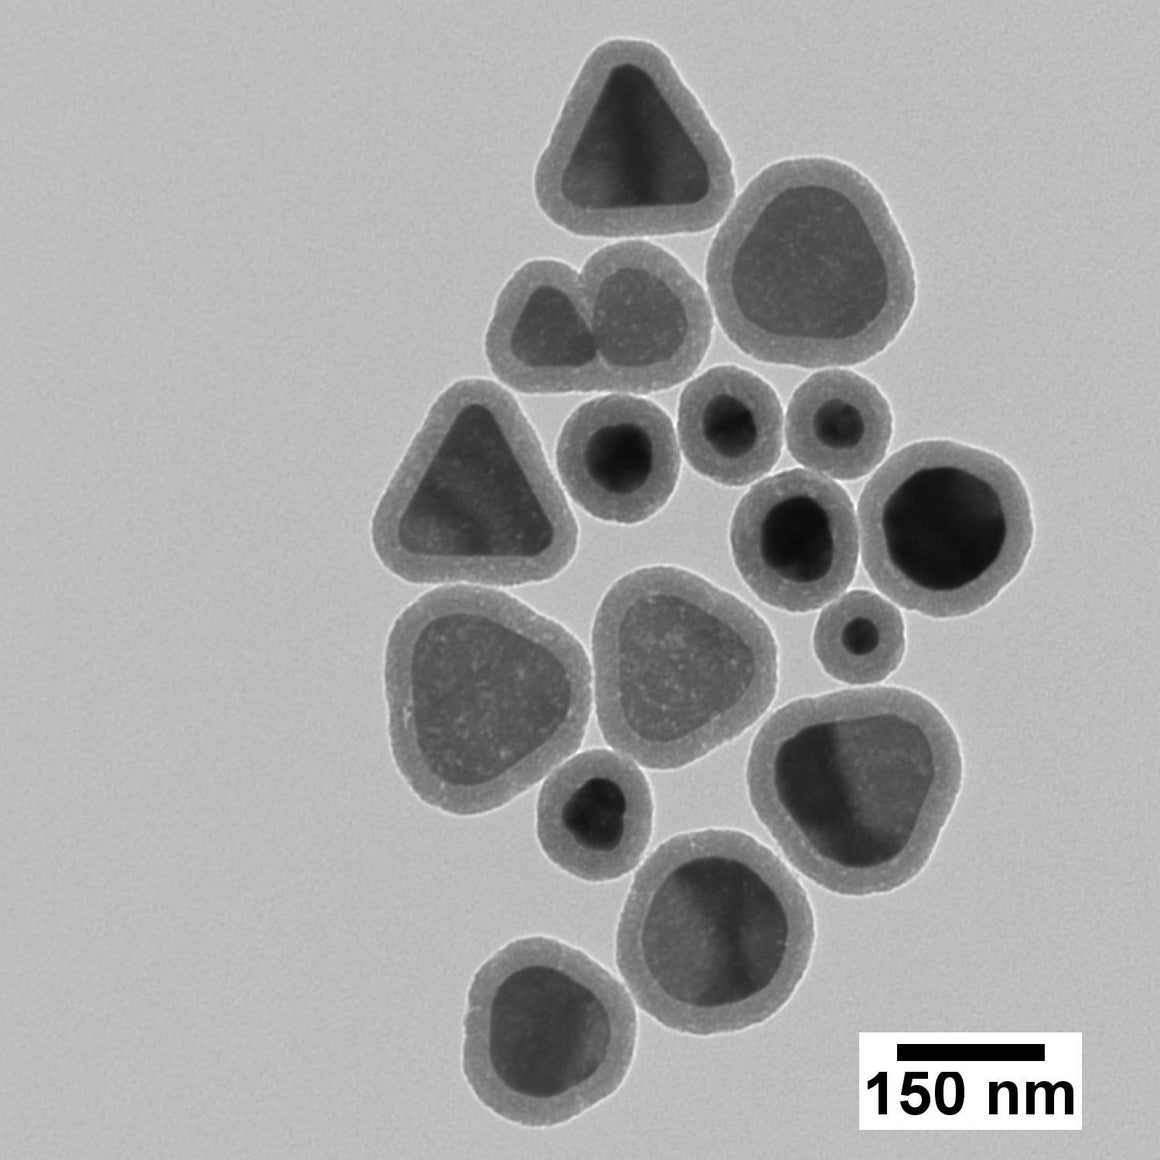 NanoXact Silver Nanoplates – Silica Shelled